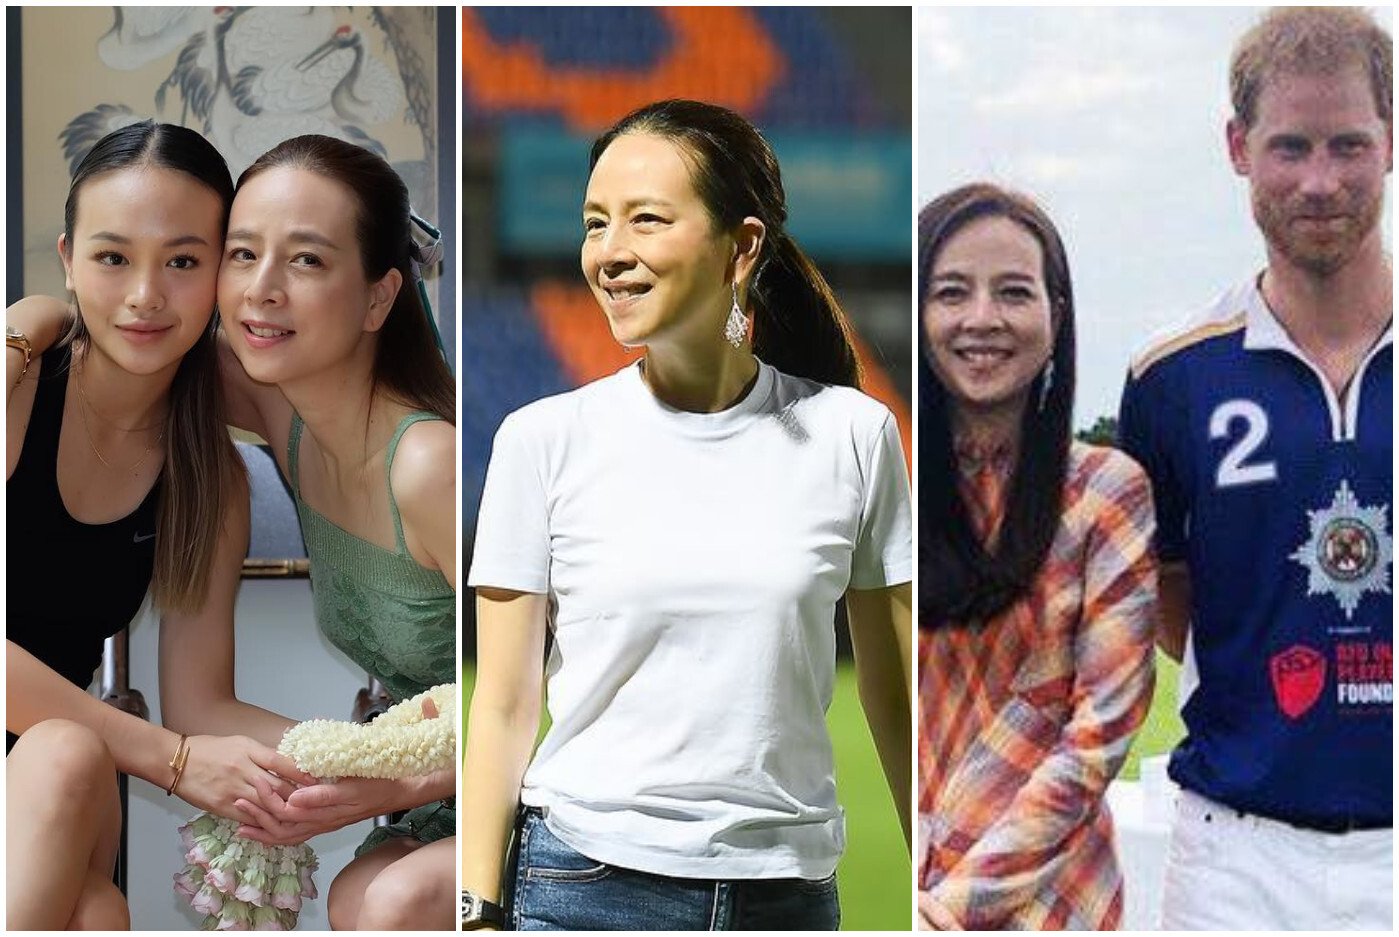 In China, Eileen Gu Made $31.4 Million in Endorsement Deals Last Year